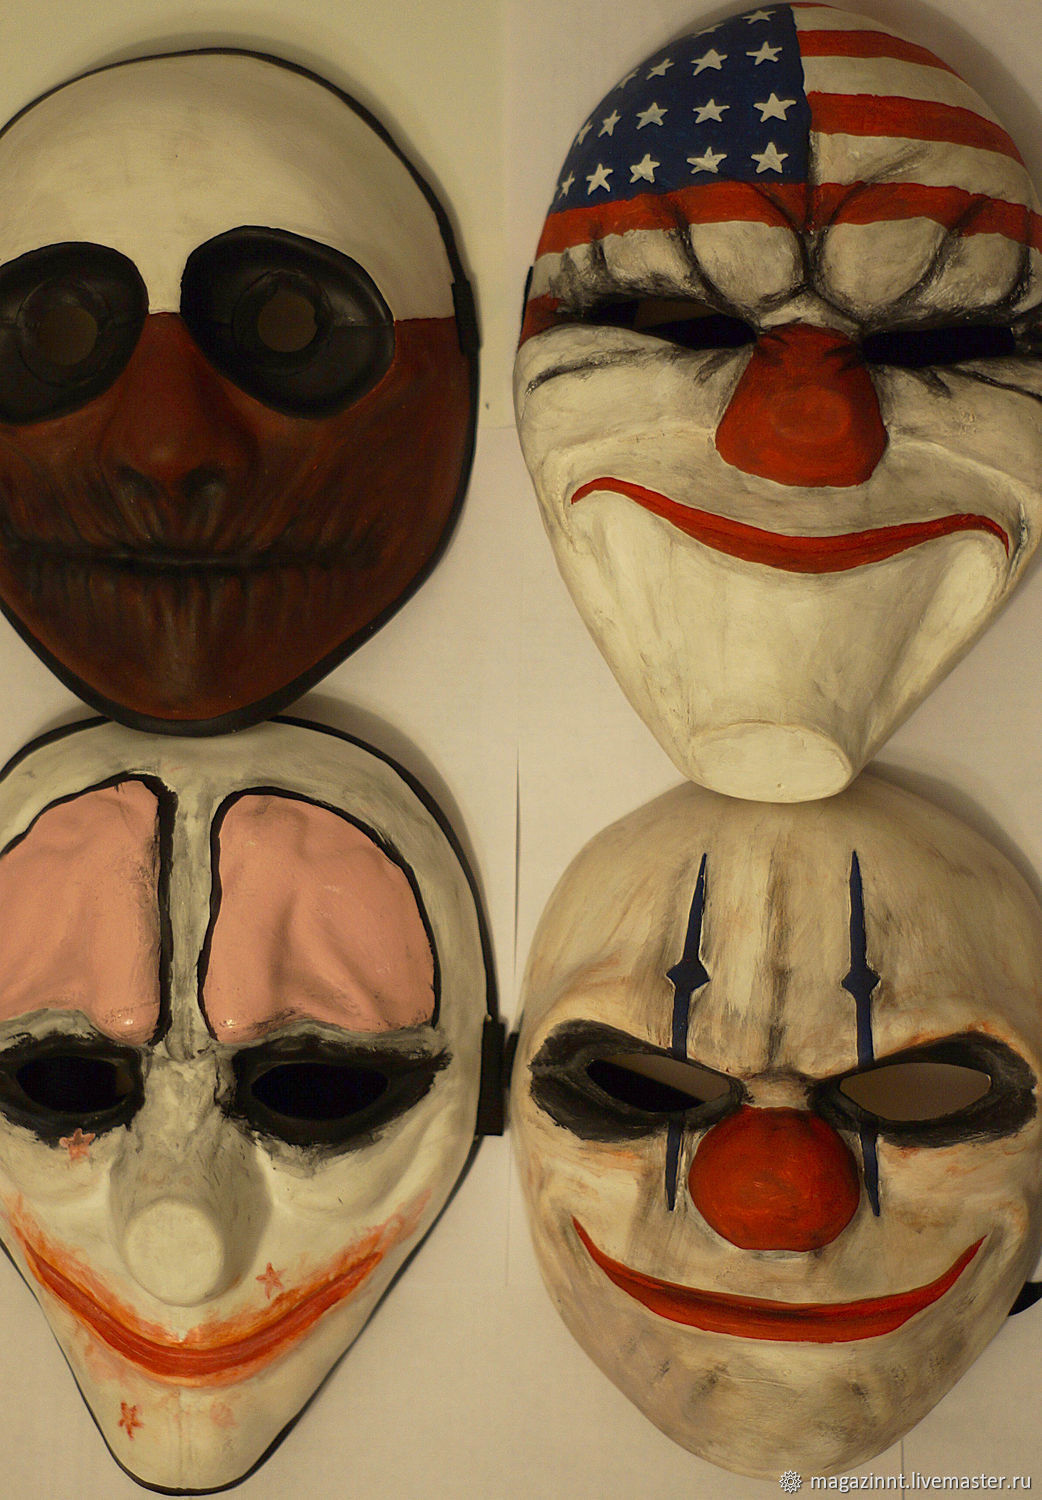 Masks payday 2 dallas фото 62